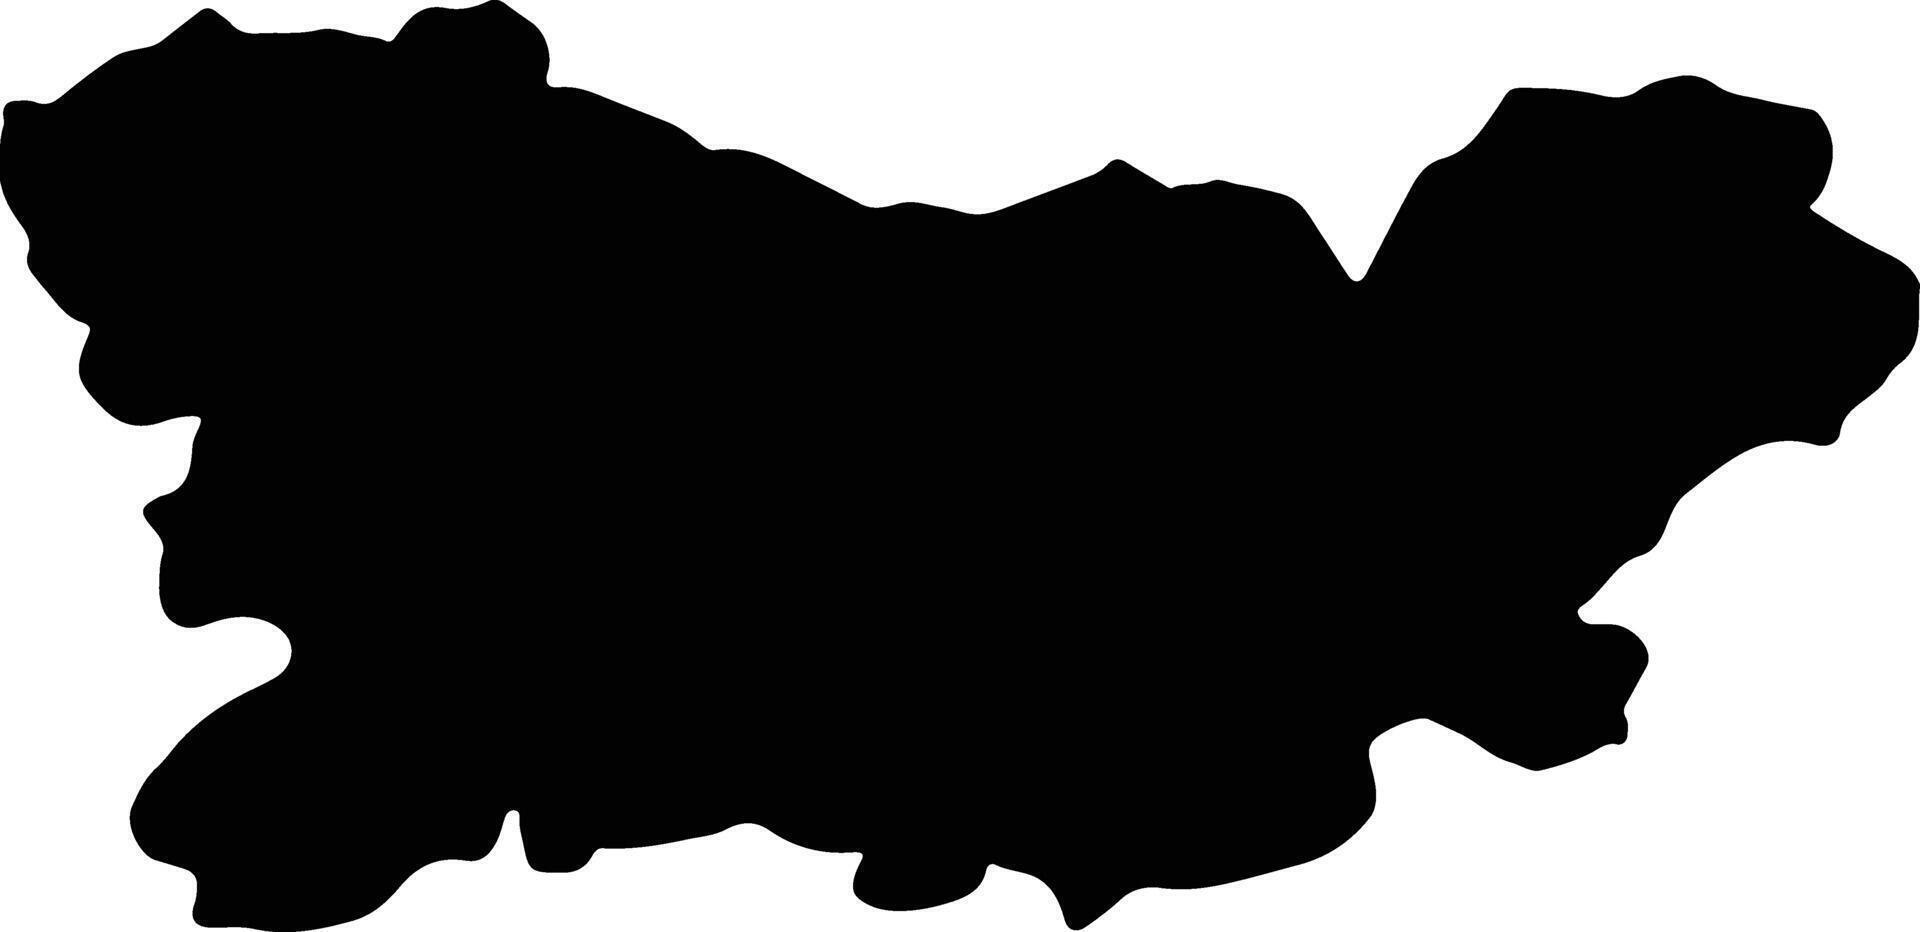 Orense Spain silhouette map vector